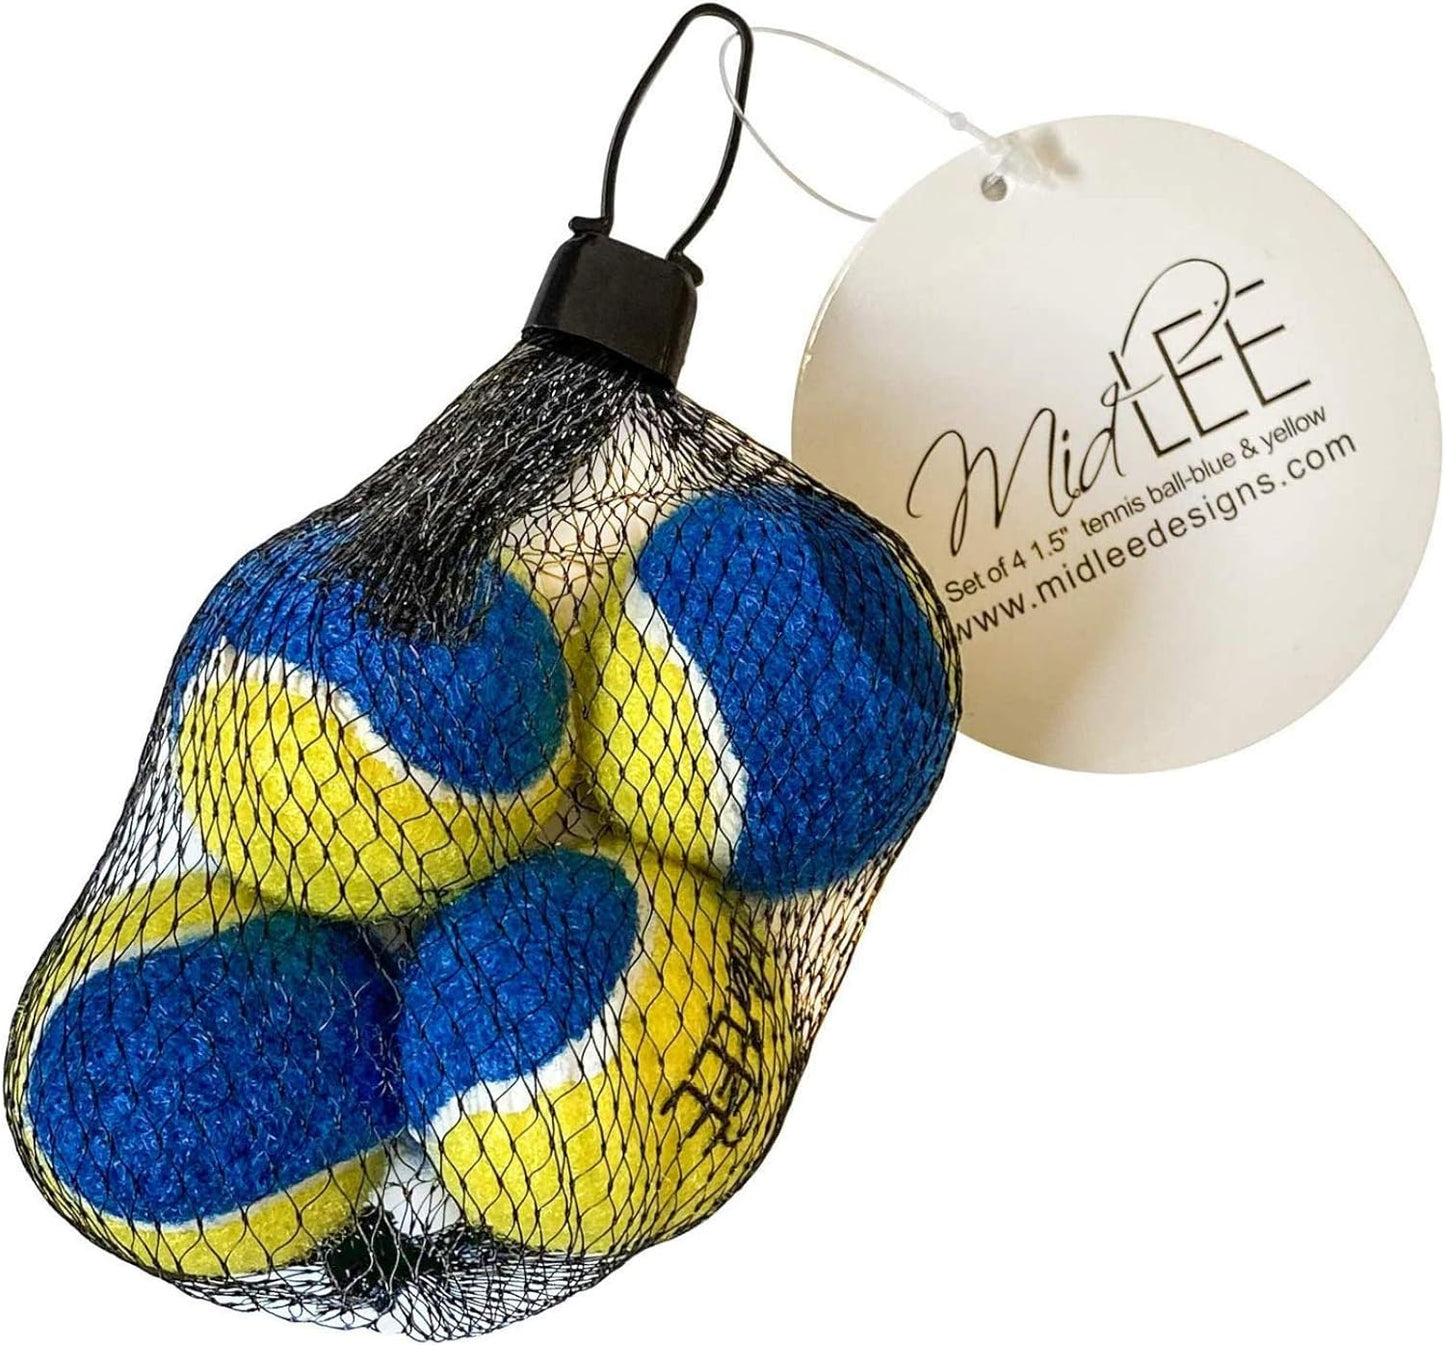 Midlee Mini Dog Tennis Balls - Blue/Yellow- Pack of 4